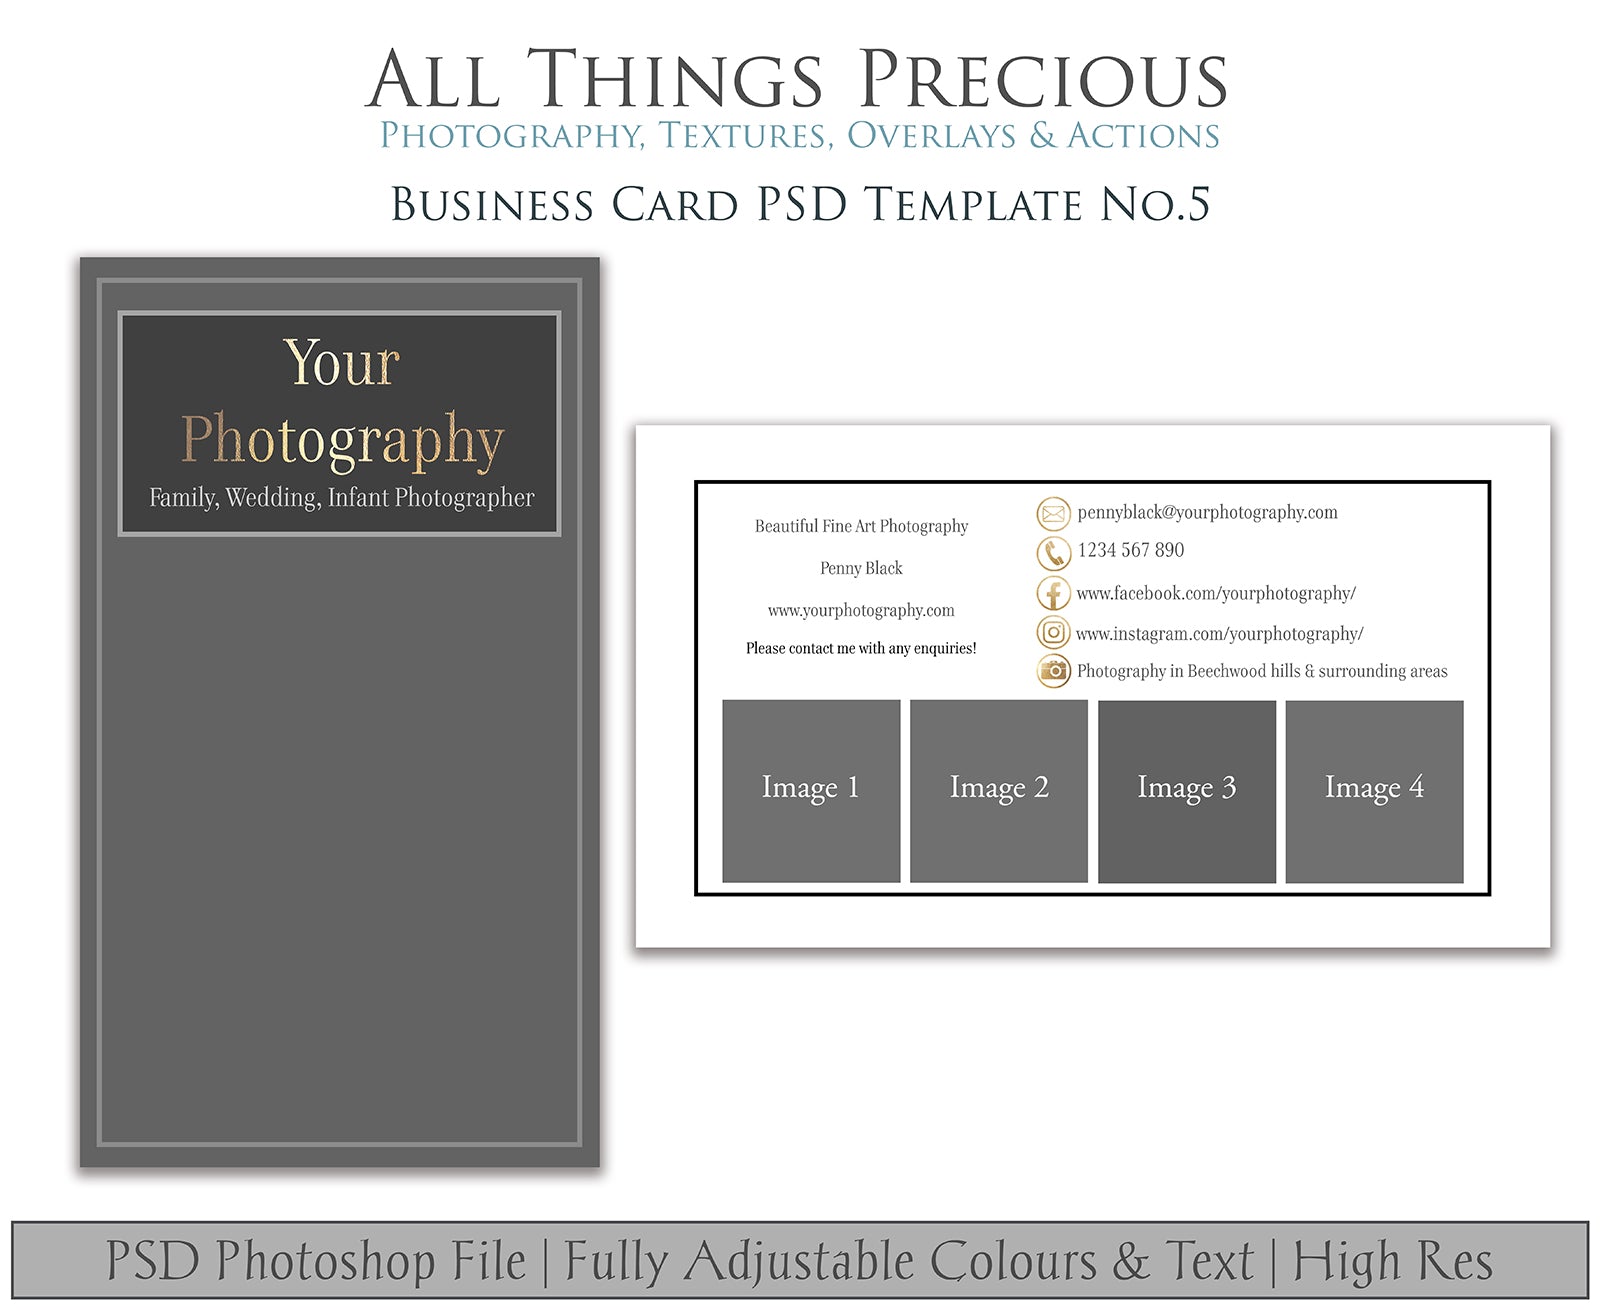 BUSINESS CARD - PSD Template No. 5